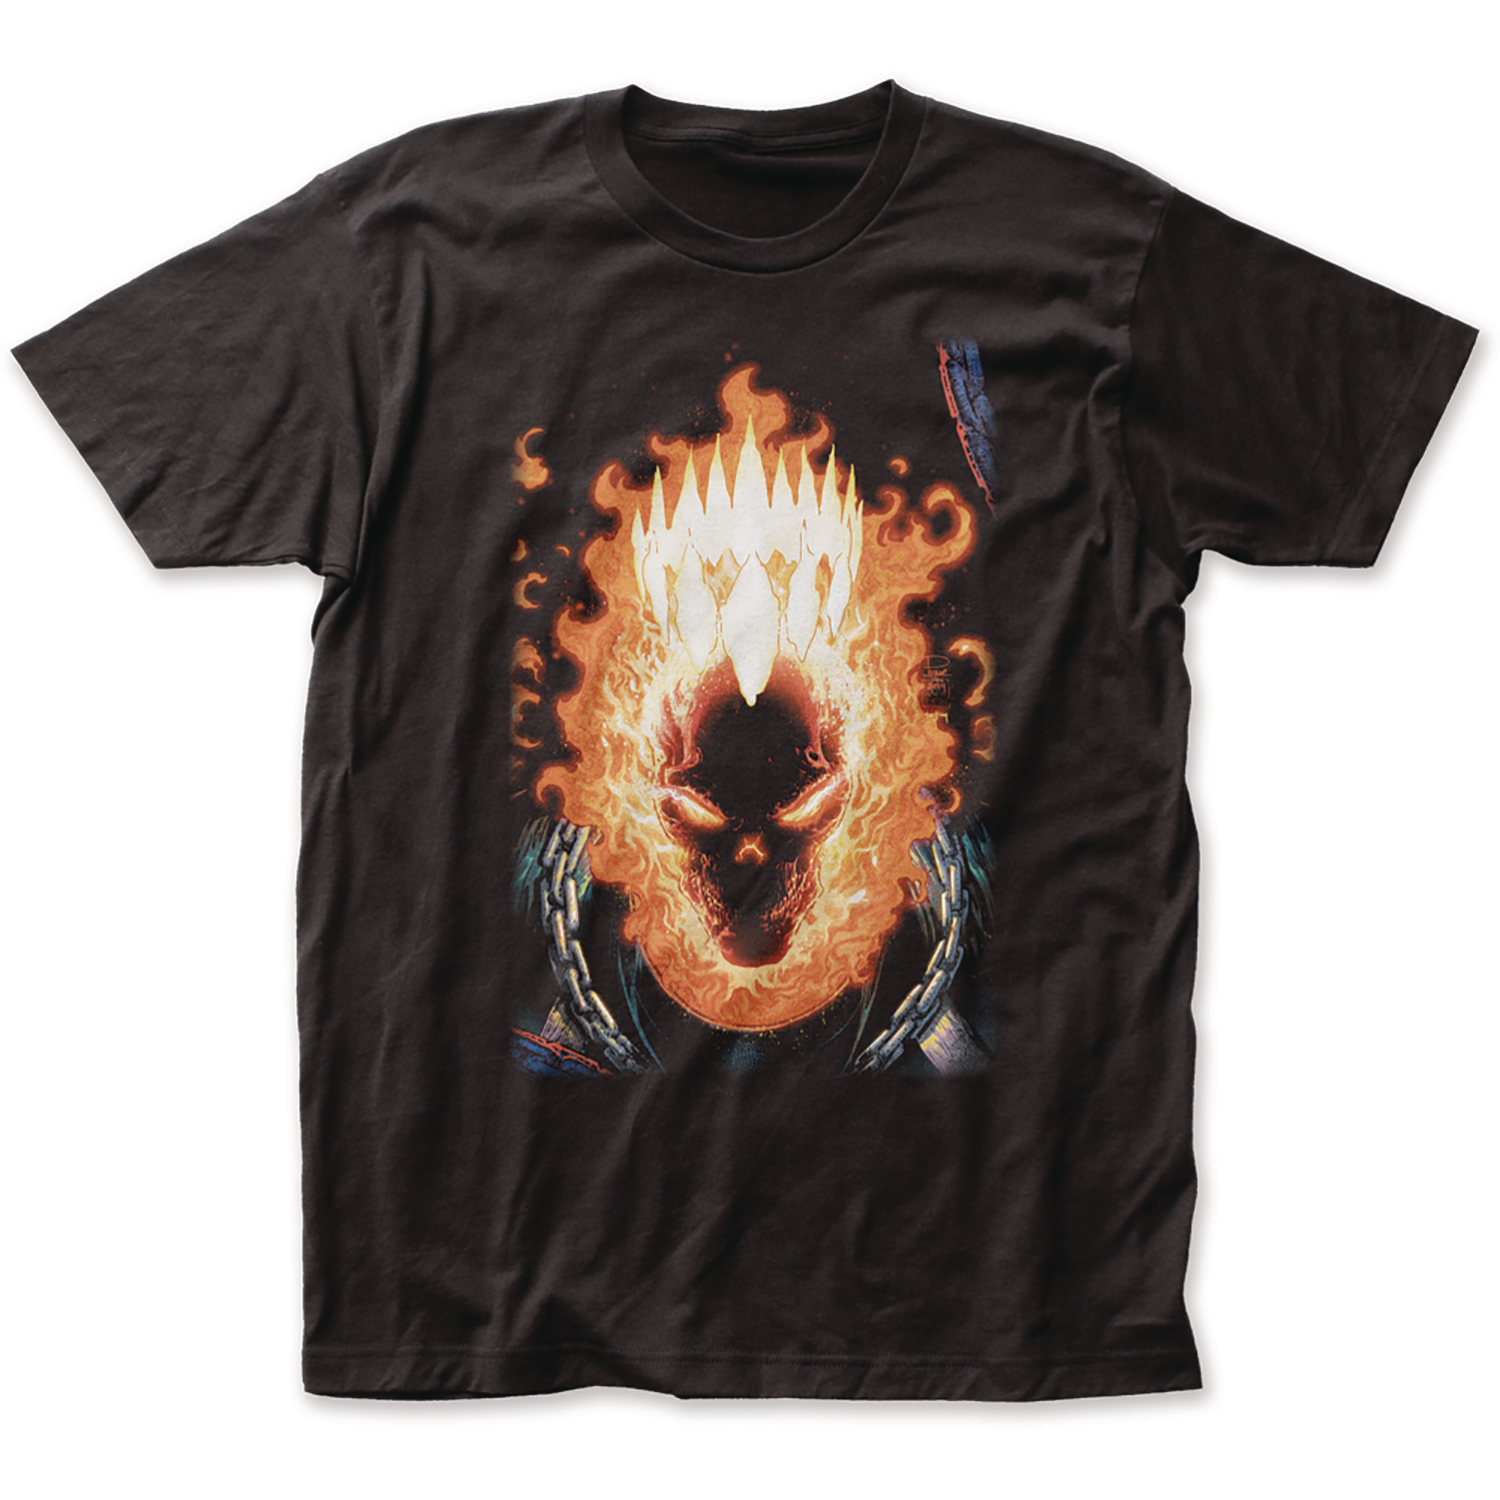 Marvel Ghost Rider Crown Px T-Shirt Medium